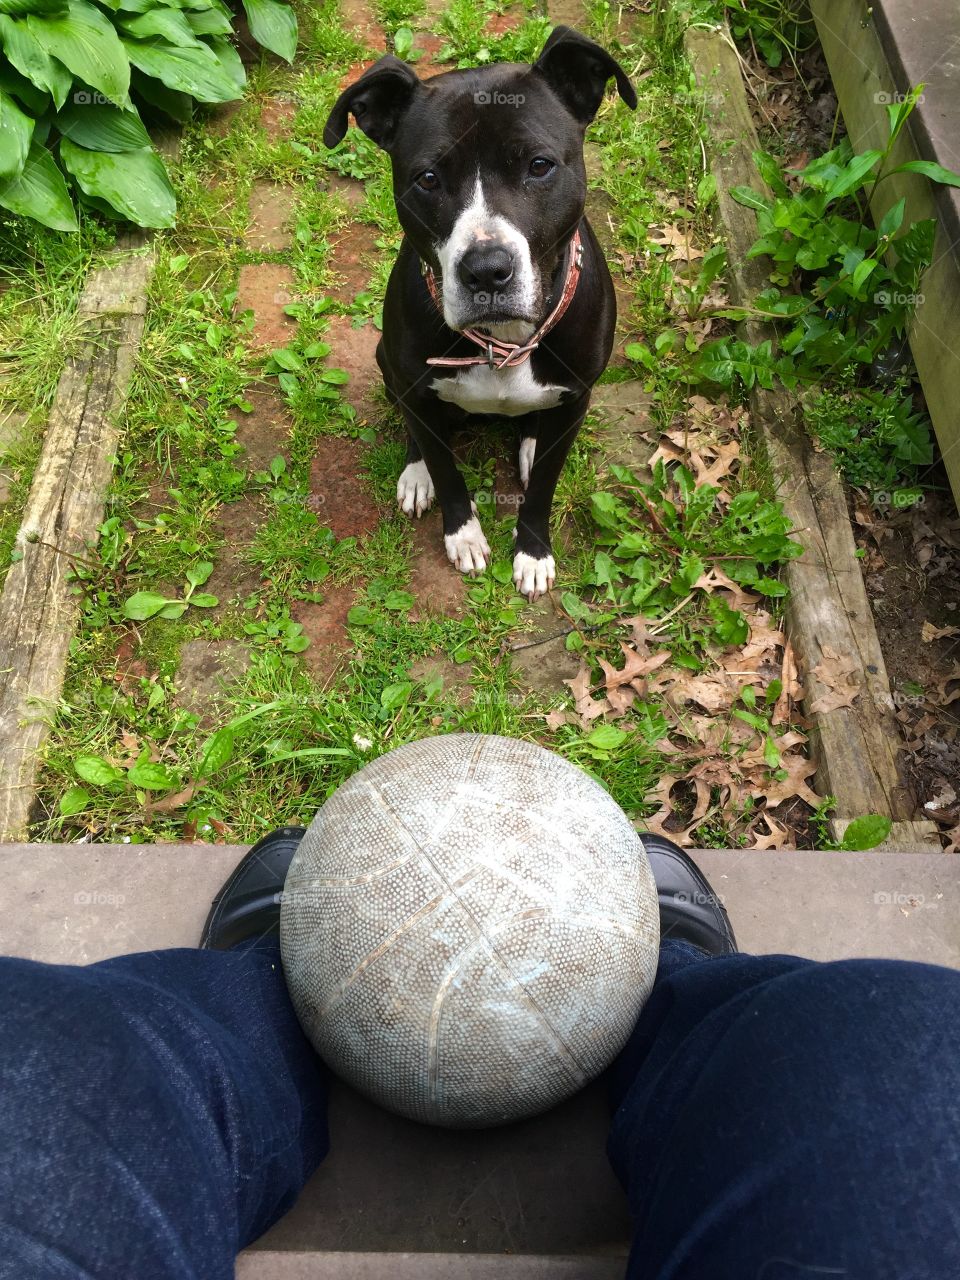 Throw me that ball